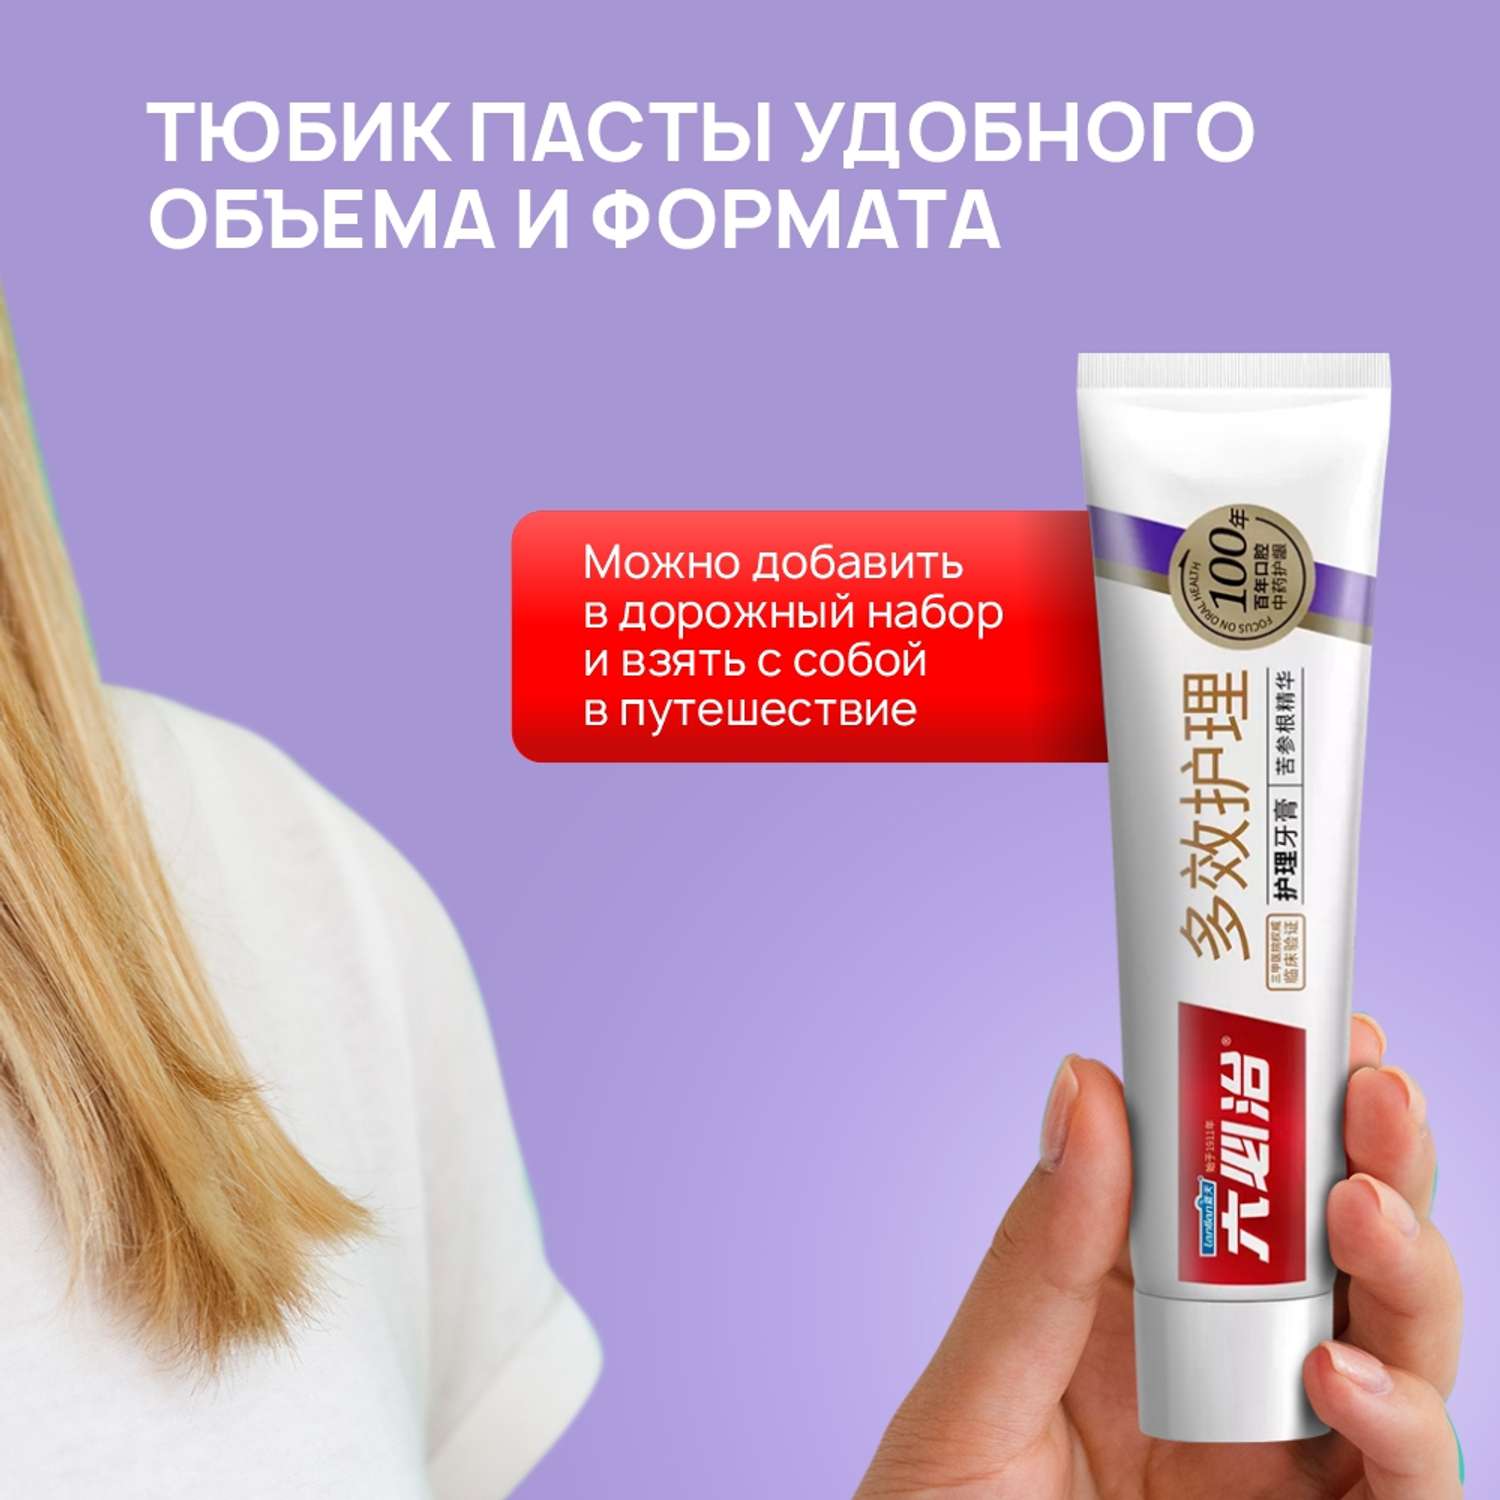 Зубная паста Liby multi effect care освежающая мята fluoride free 120 гр - фото 9